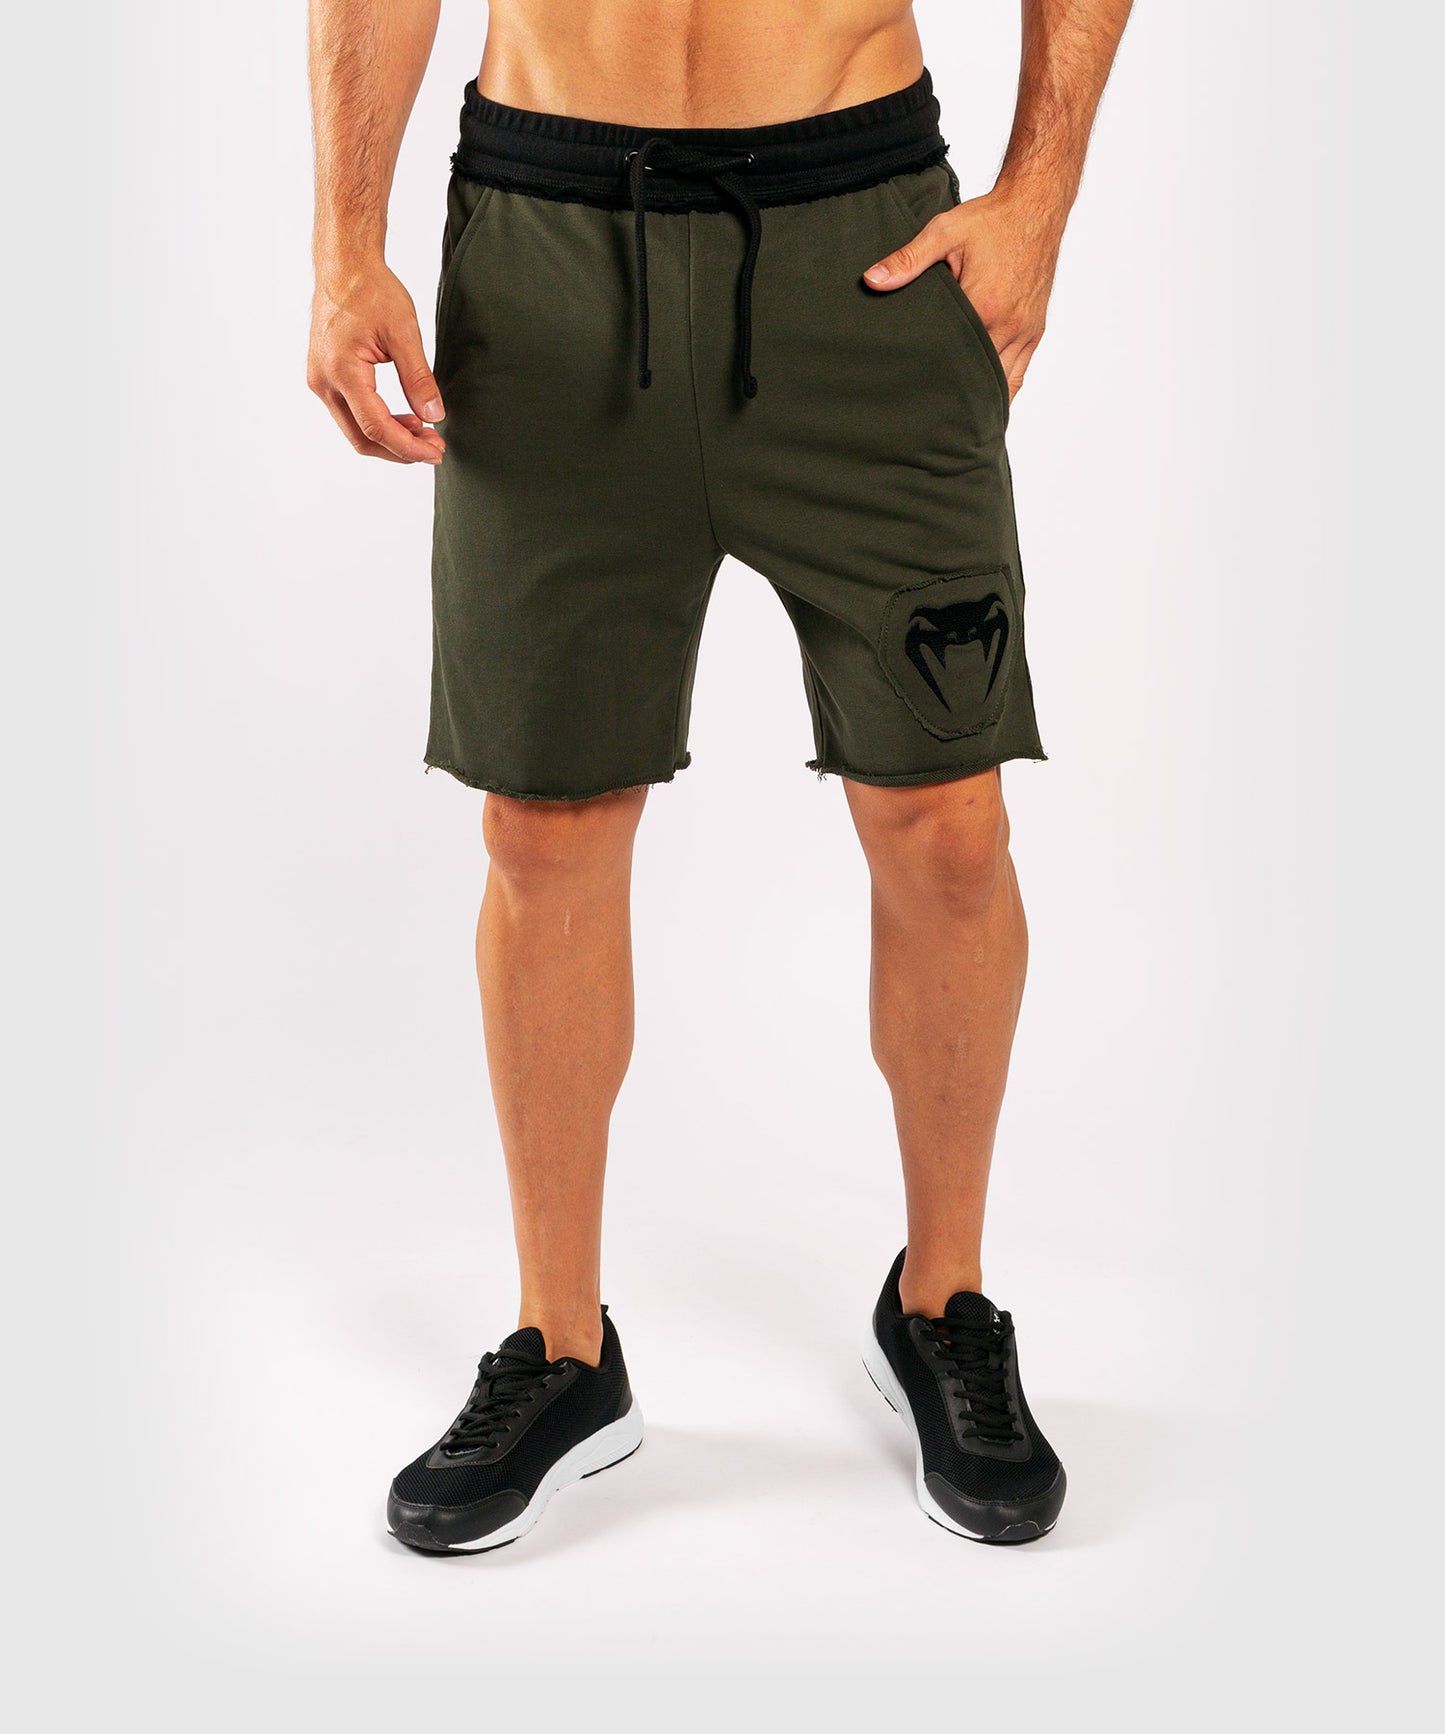 Venum Cutback 2.0 Cotton Shorts